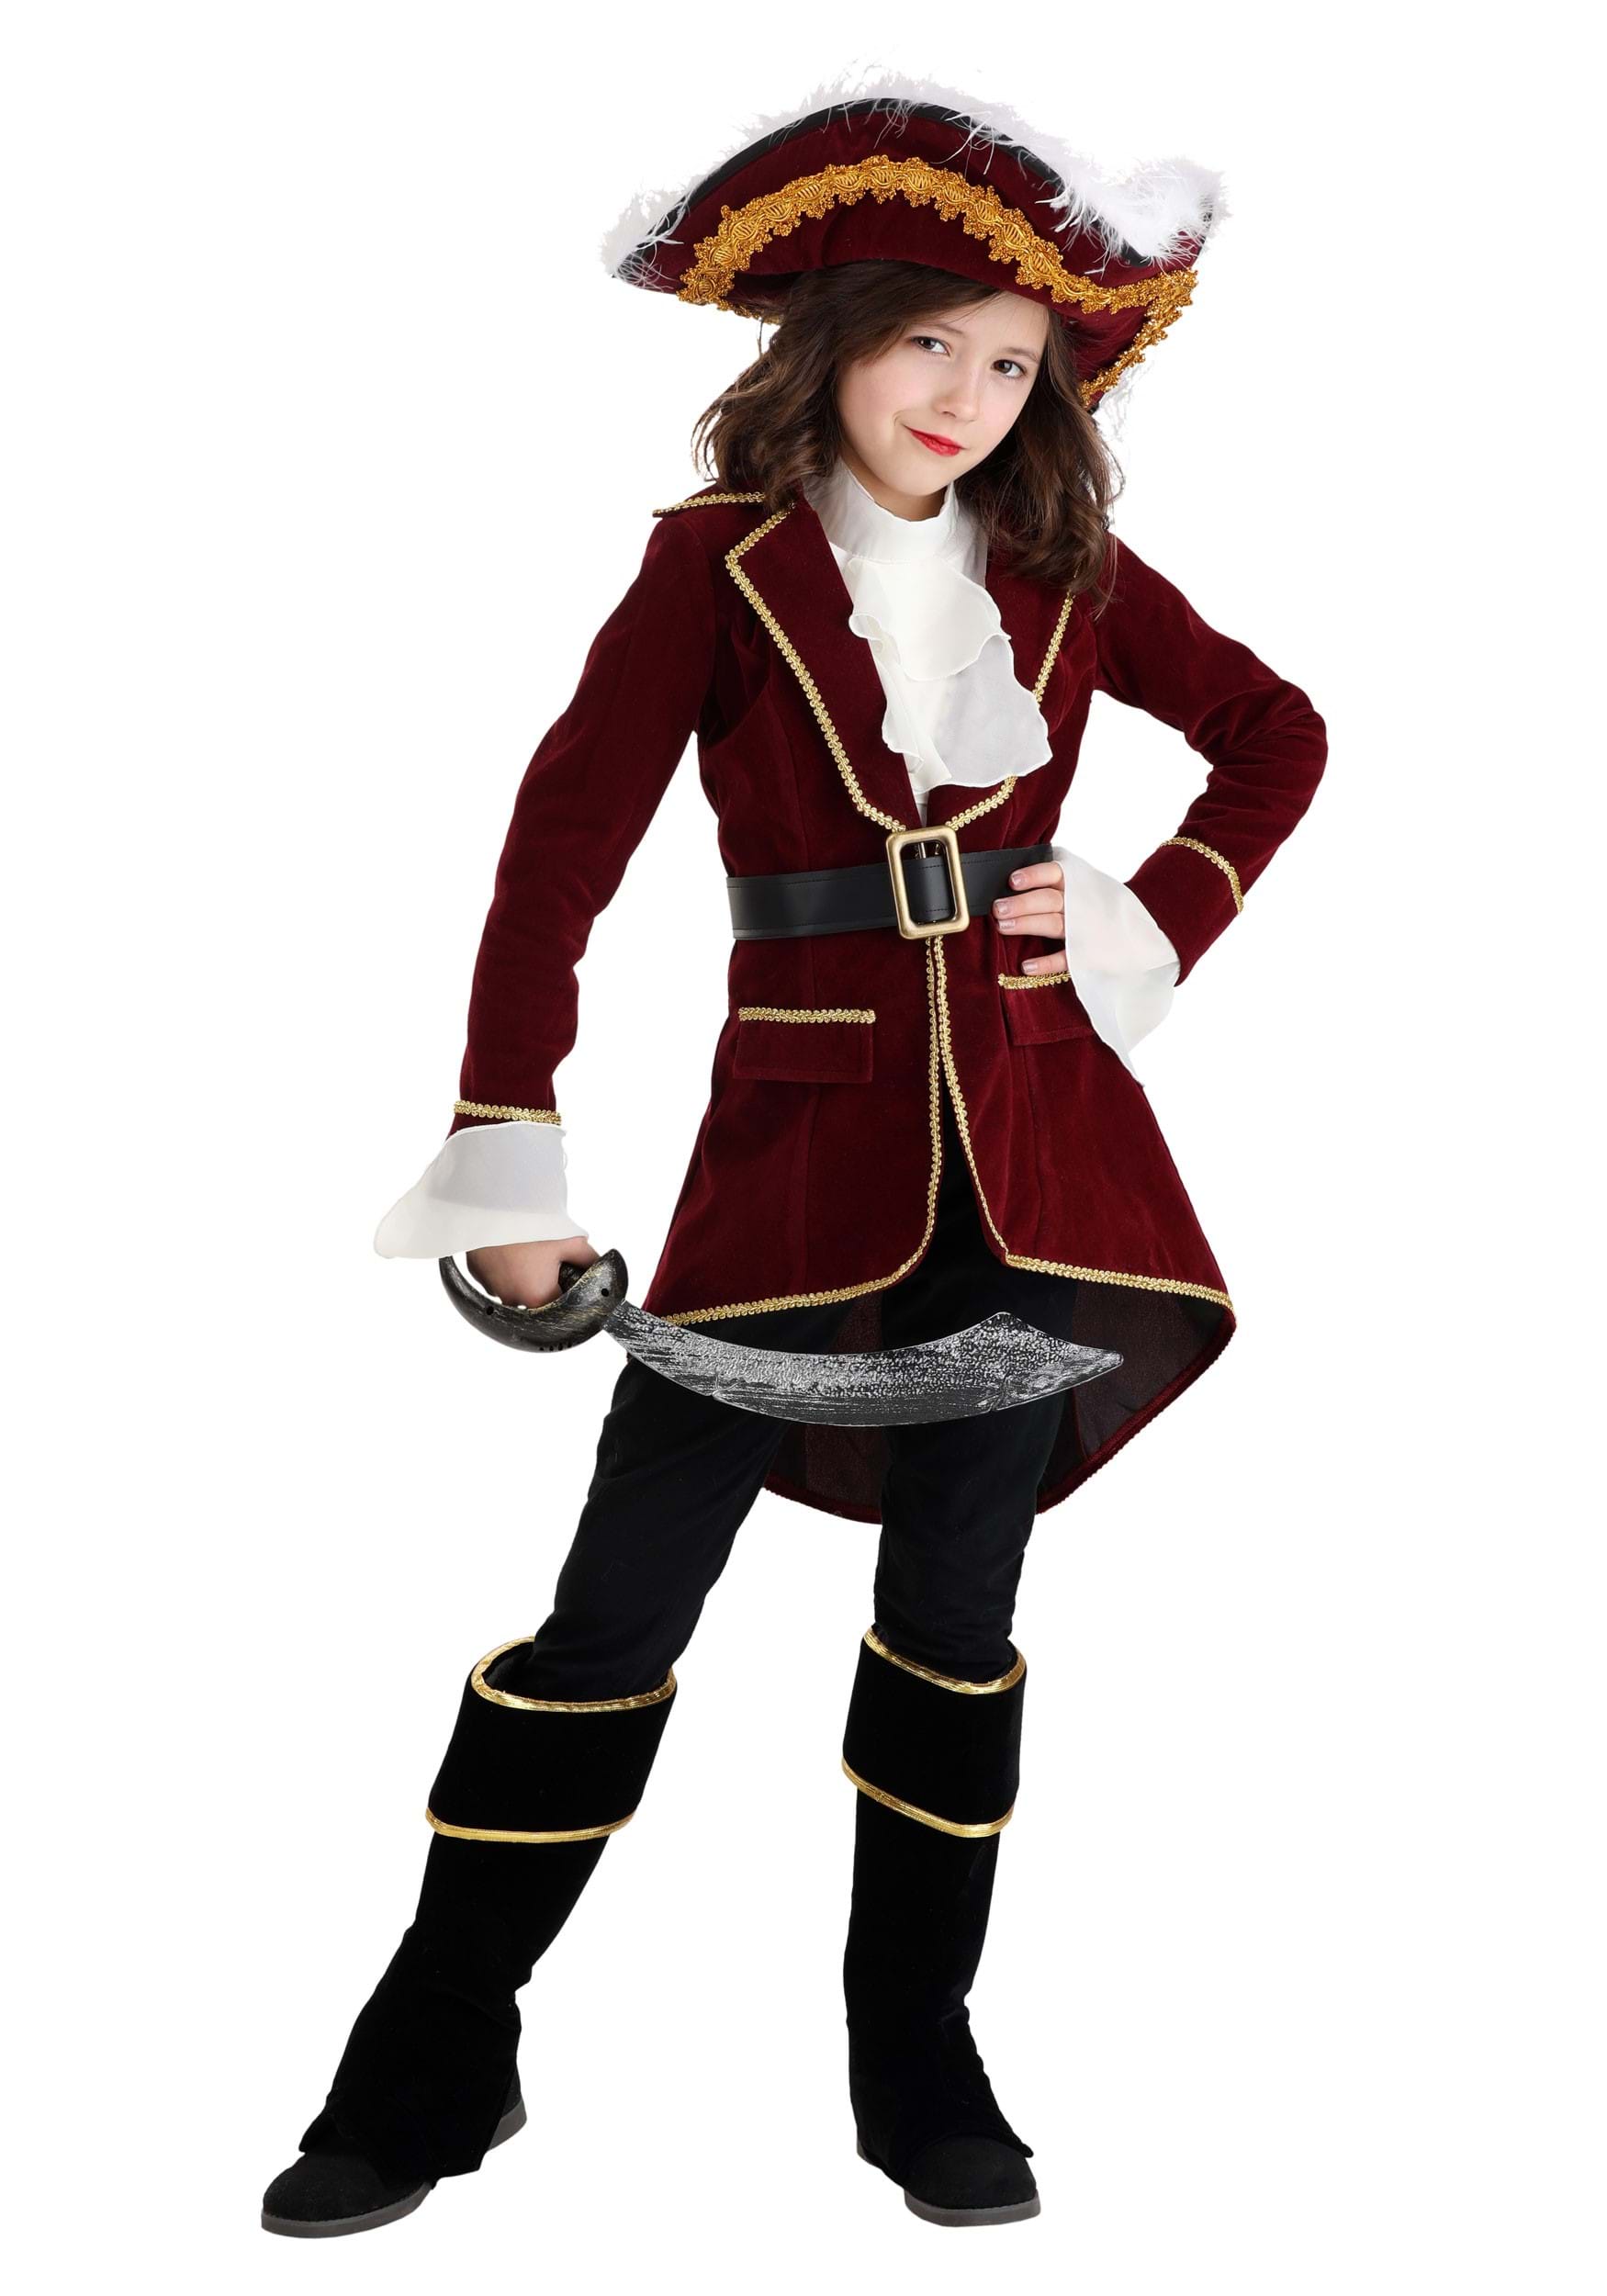 https://images.halloweencostumes.com/products/78595/1-1/kids-captain-hook-costume.jpg